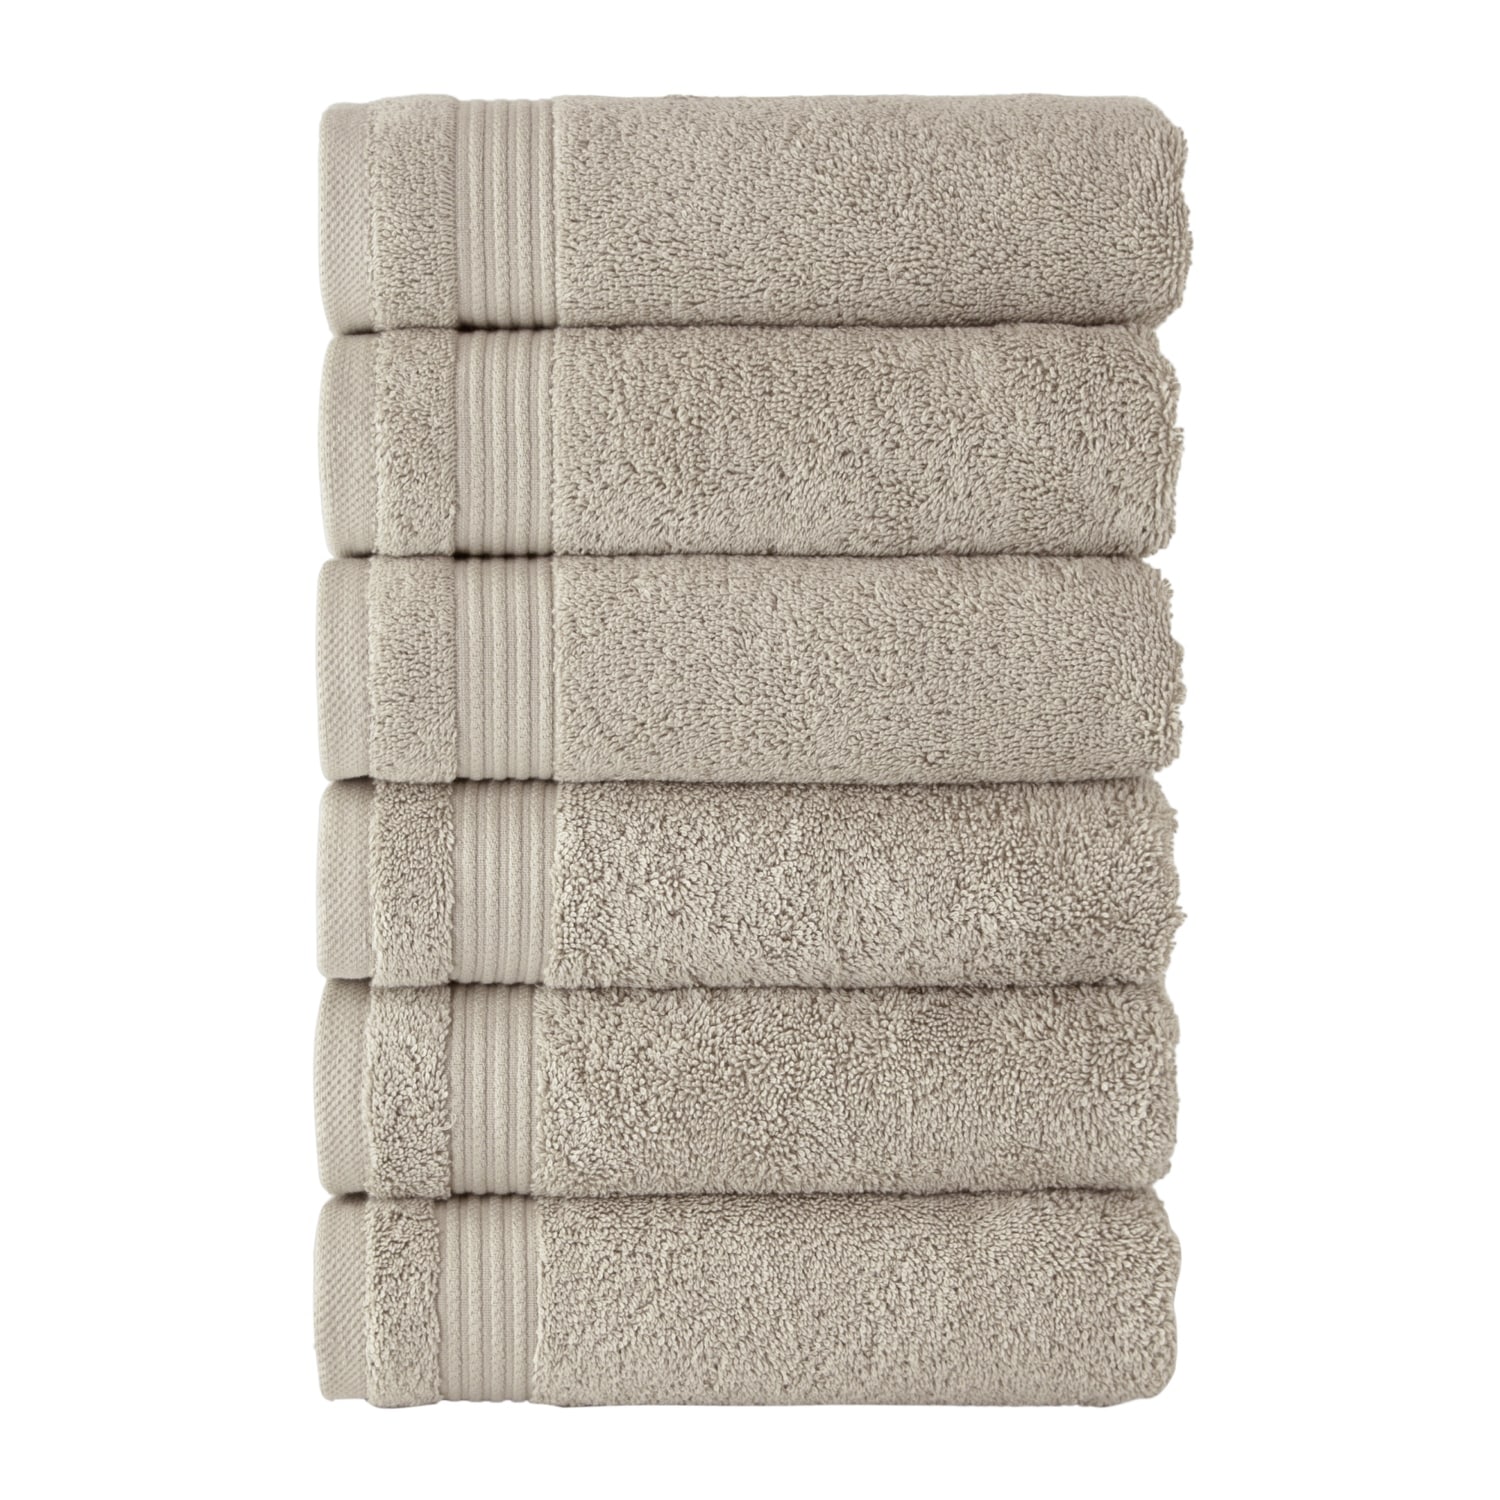 American Soft Linen 100% Turkish Cotton 35 inchx70 inch Jumbo Bath Towel- Gray, Size: Jumbo Bath Towel 35x70